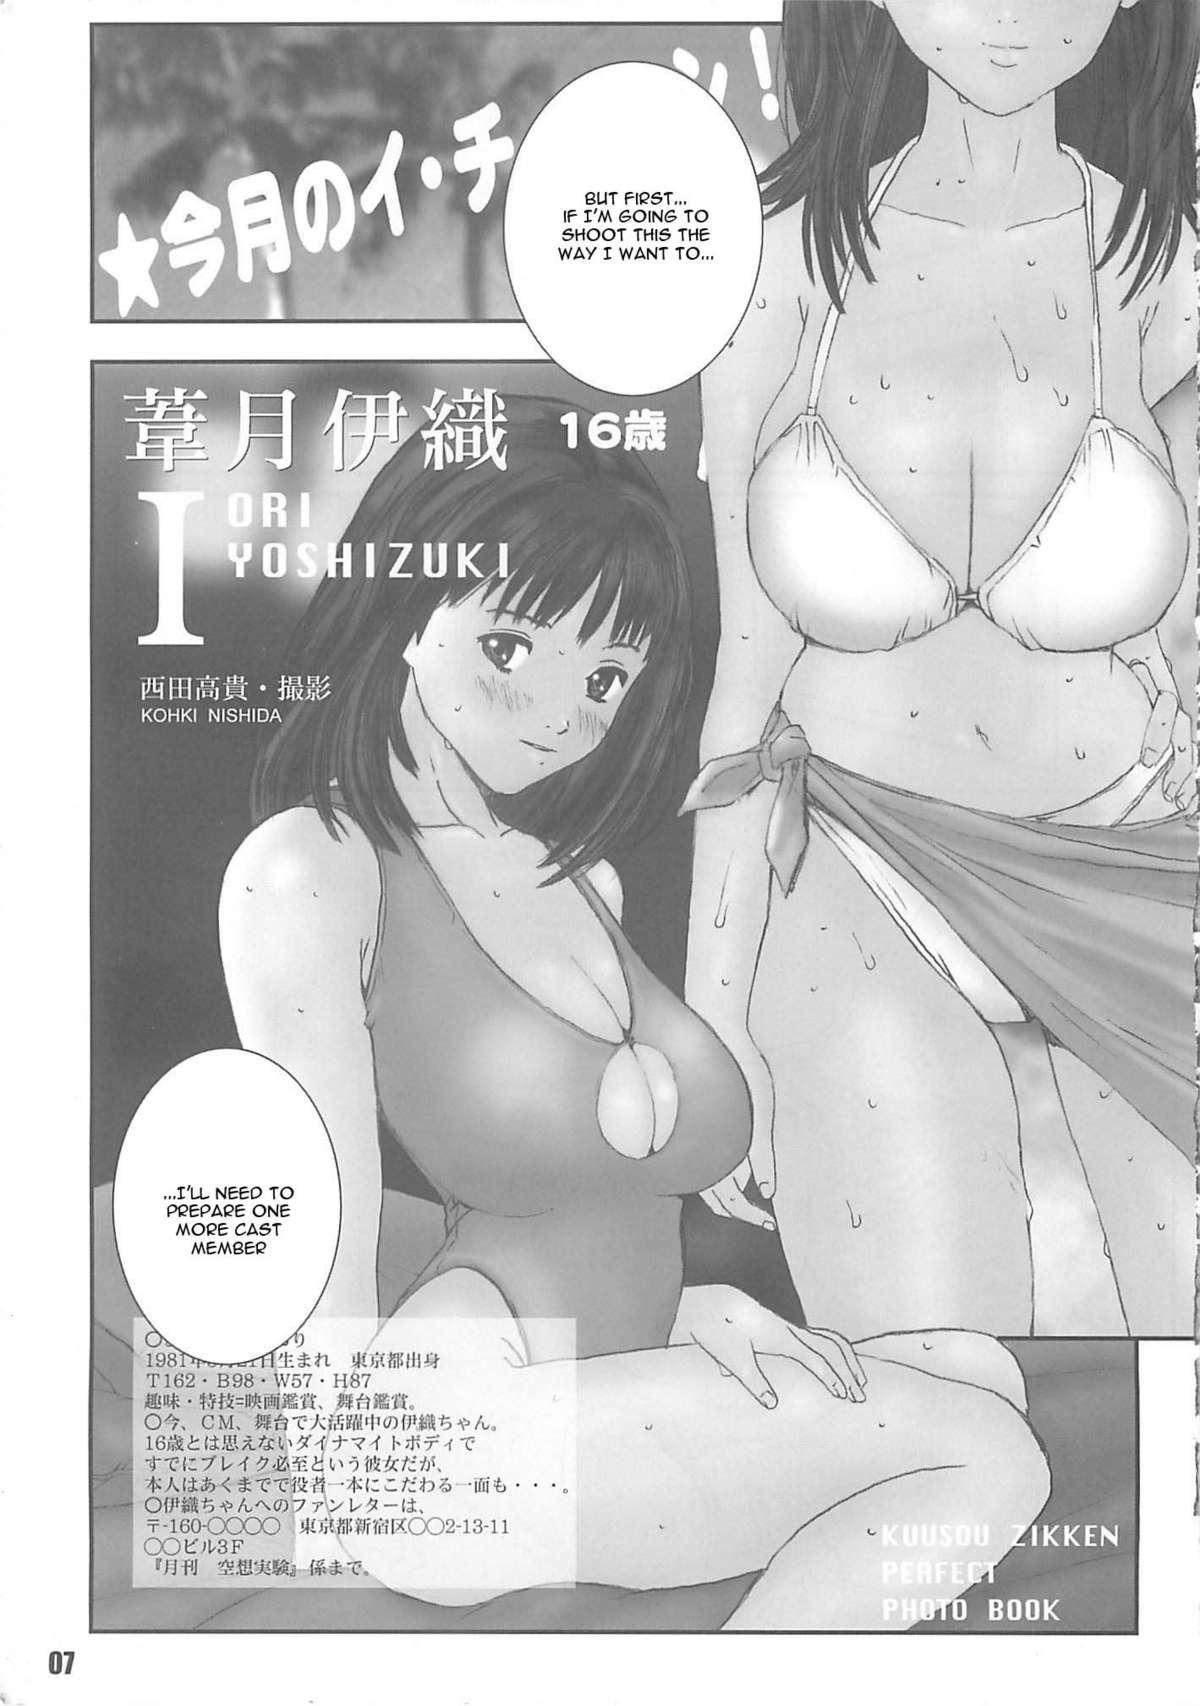 High Kuusou Zikken Vol. 4 - Is Seduction - Page 7